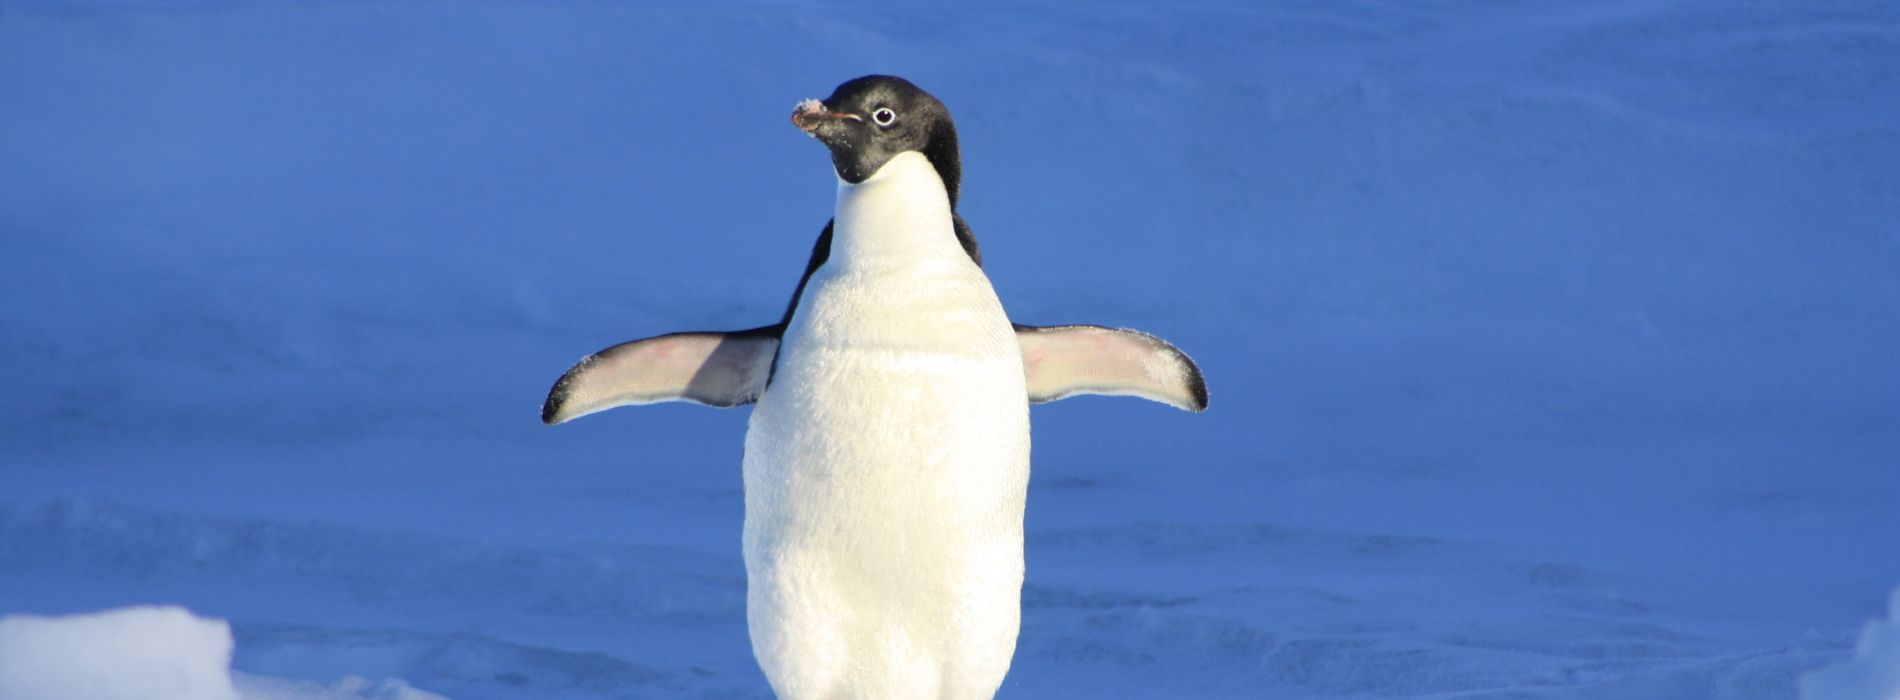 Can you hug a penguin?